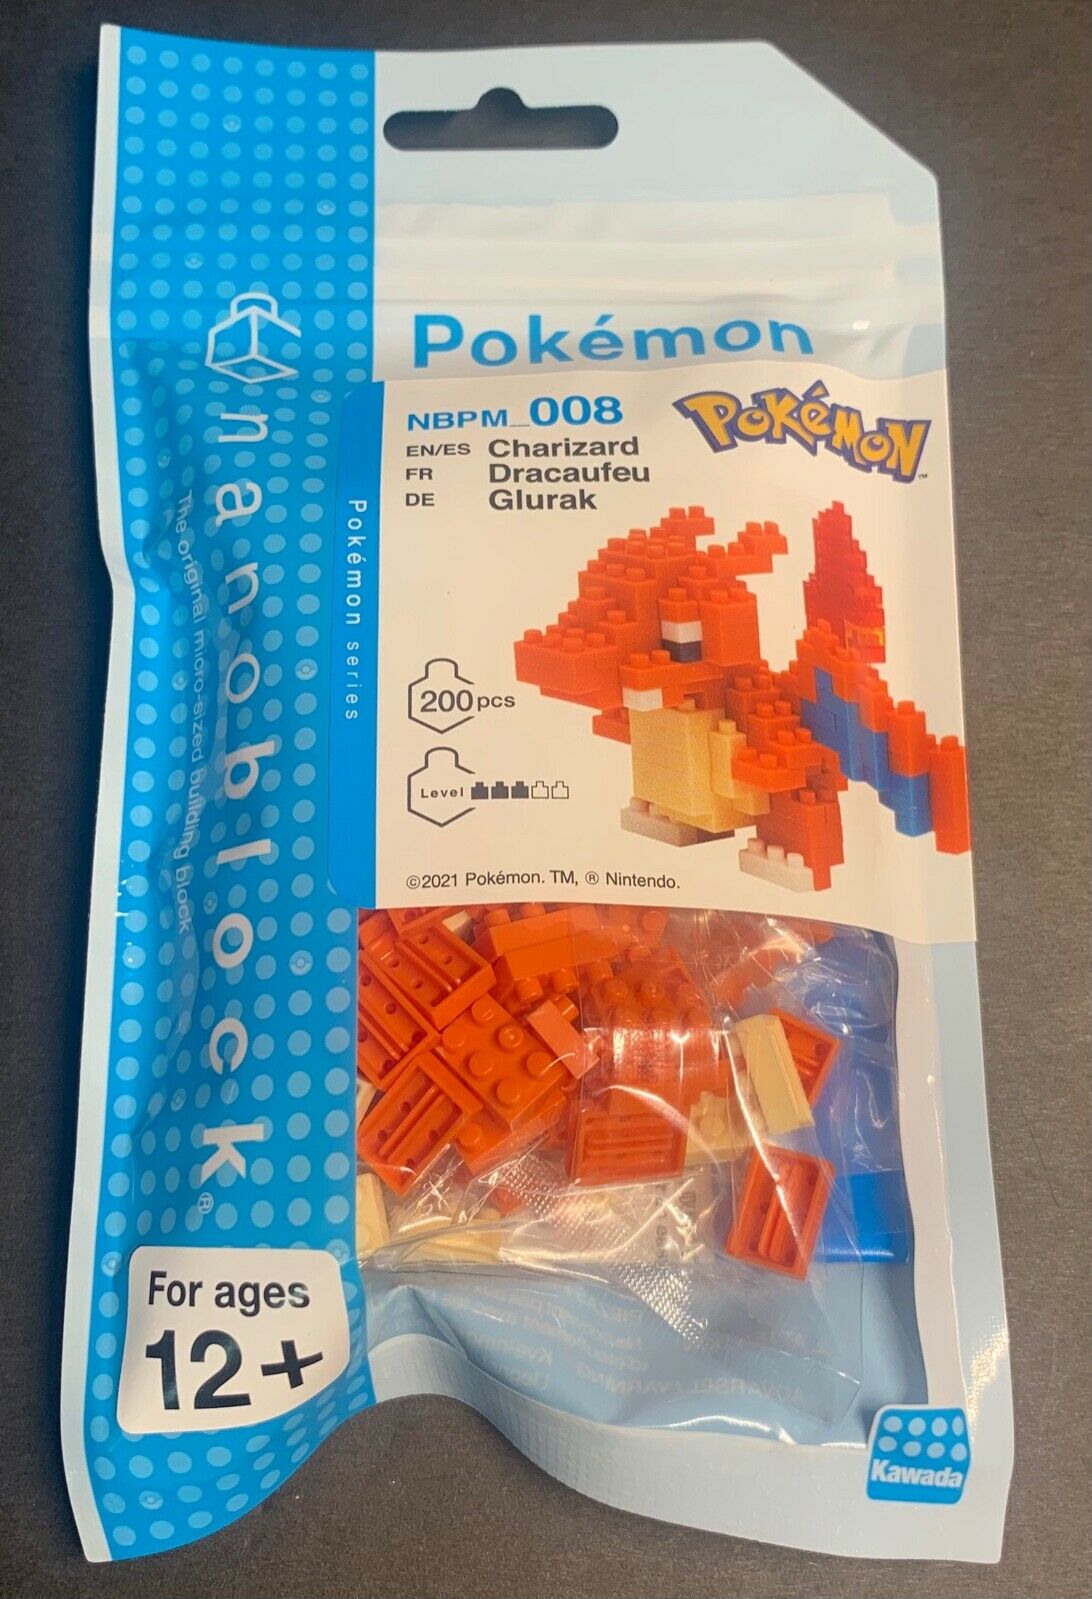 Pokemon Nanoblock Charizard 3d Puzzle / Toy - 200 Pieces - New / Sealed